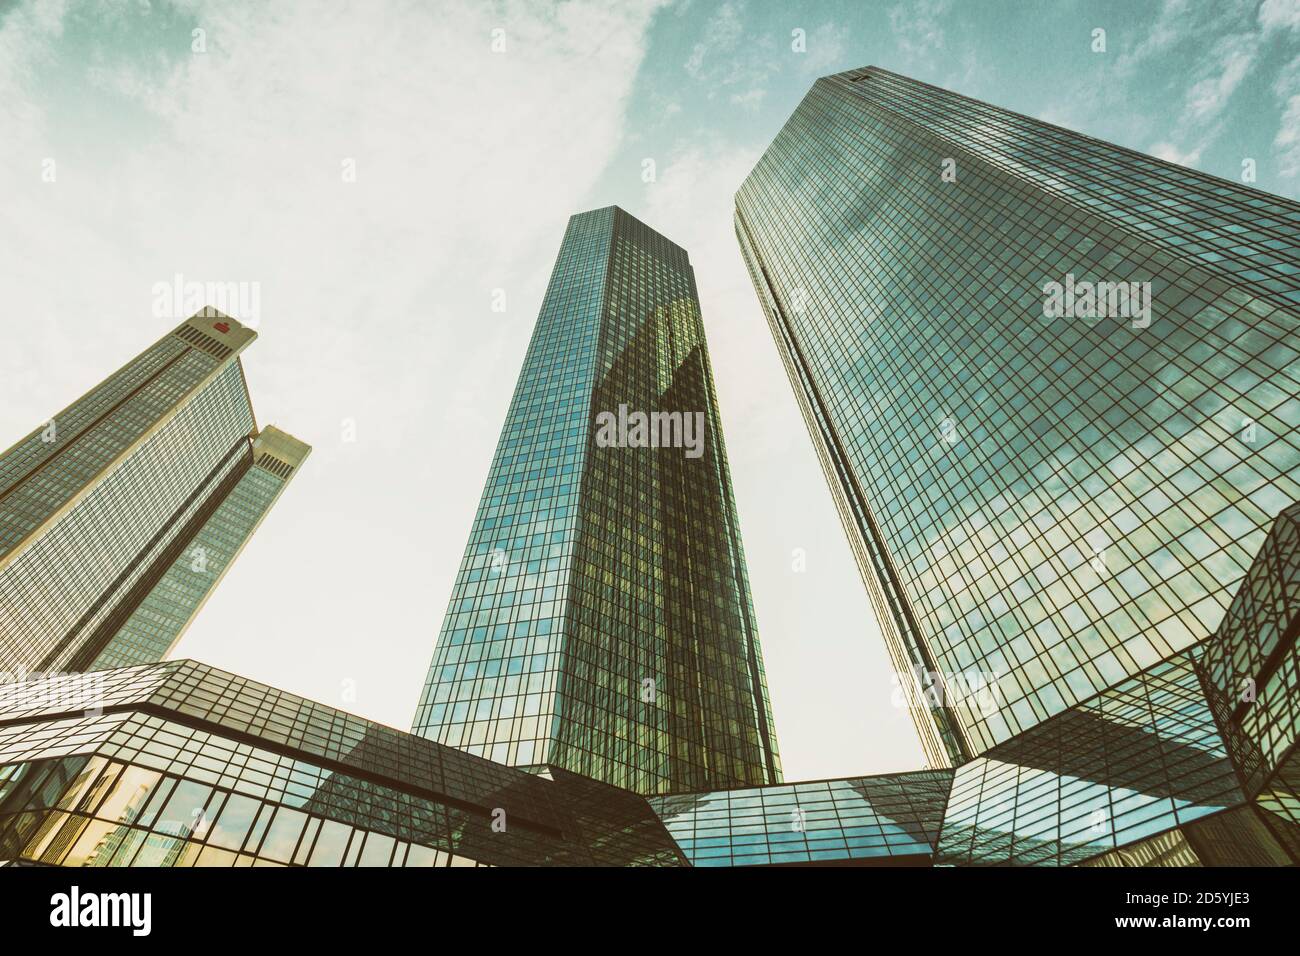 Germany, Frankfurt, modern office towers seen from below Stock Photo